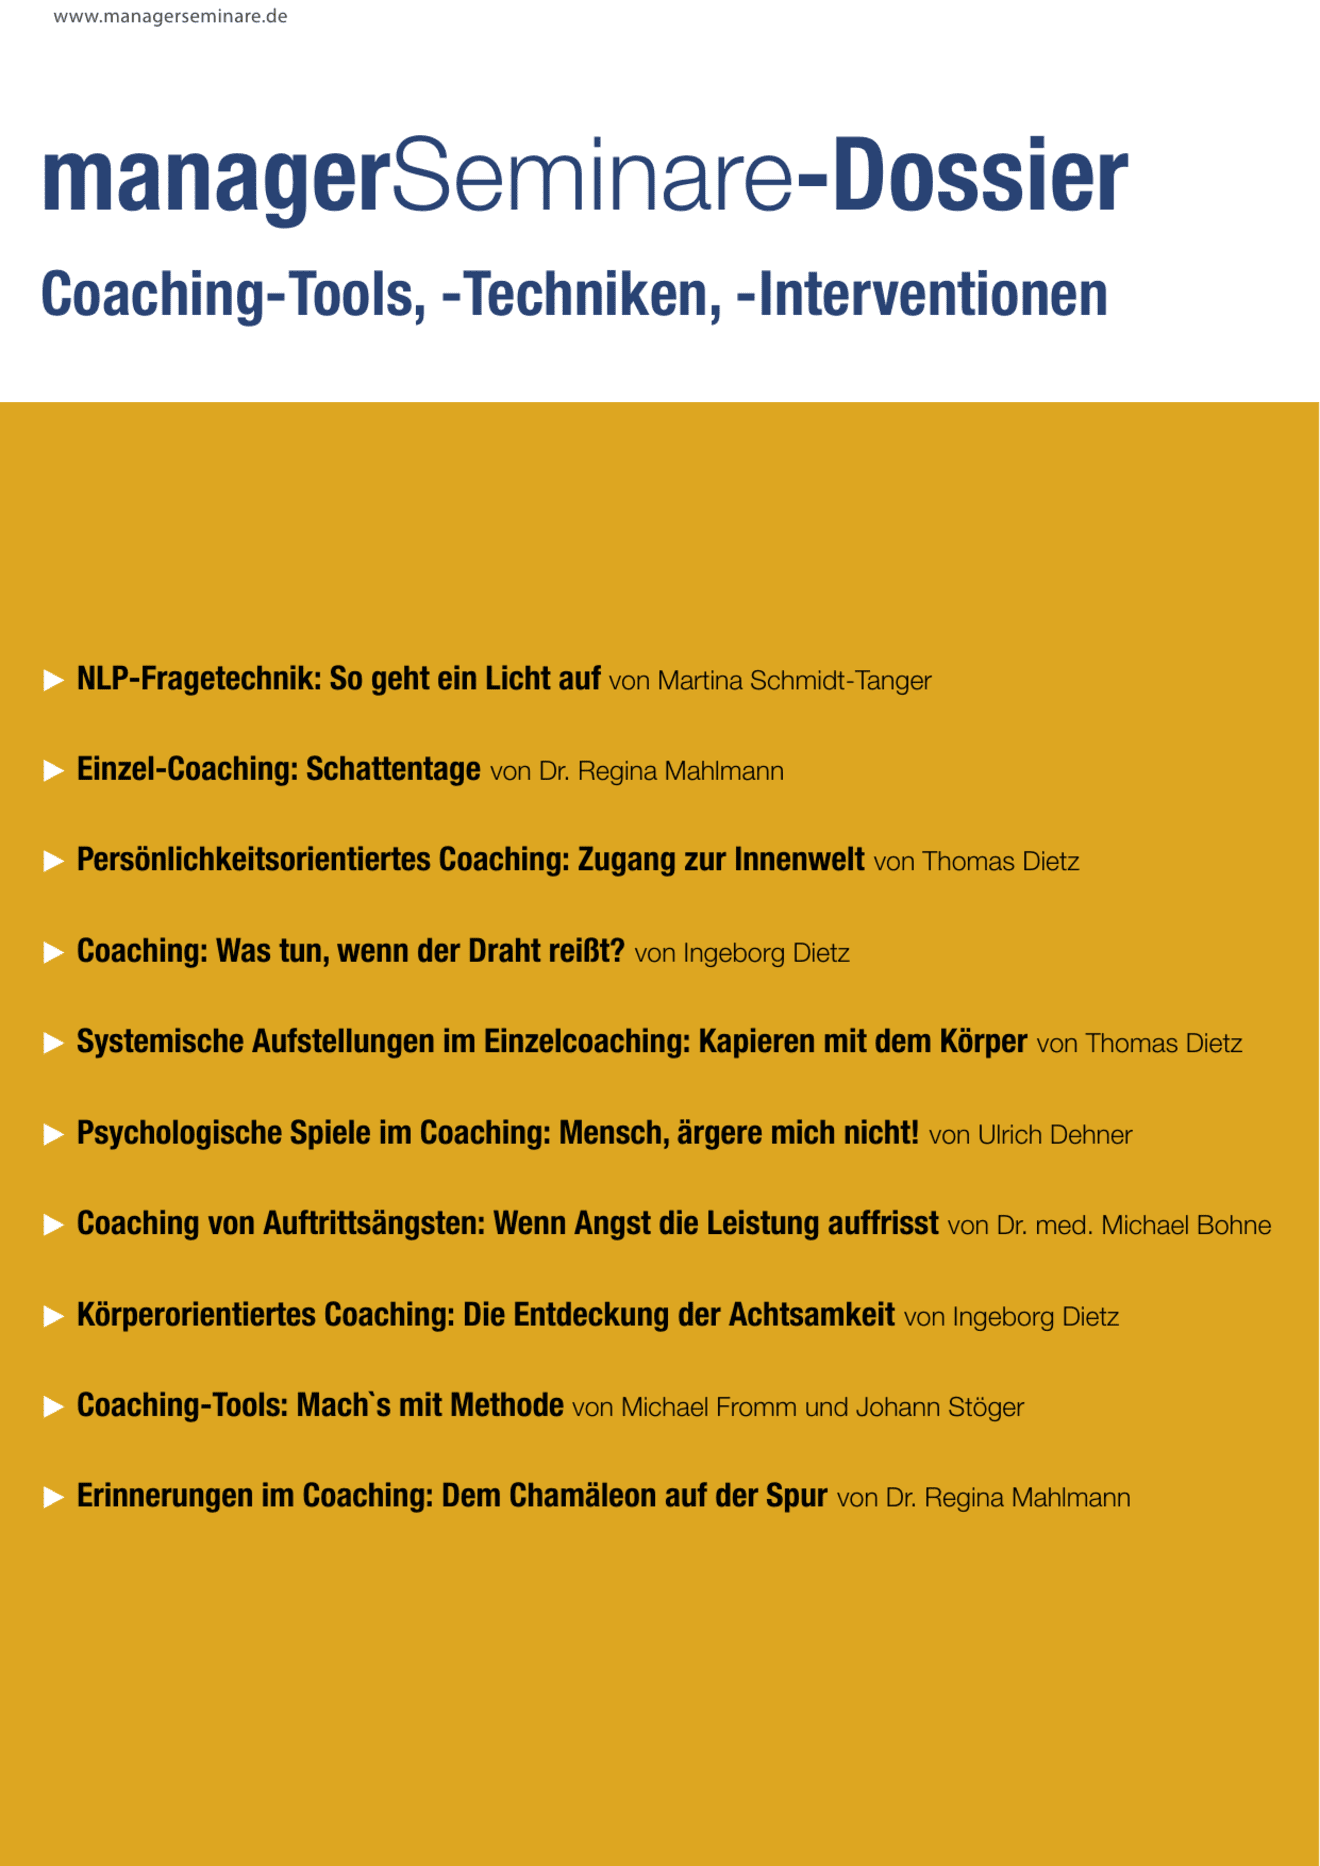 Dossier Coaching-Tools, -Techniken, -Interventionen